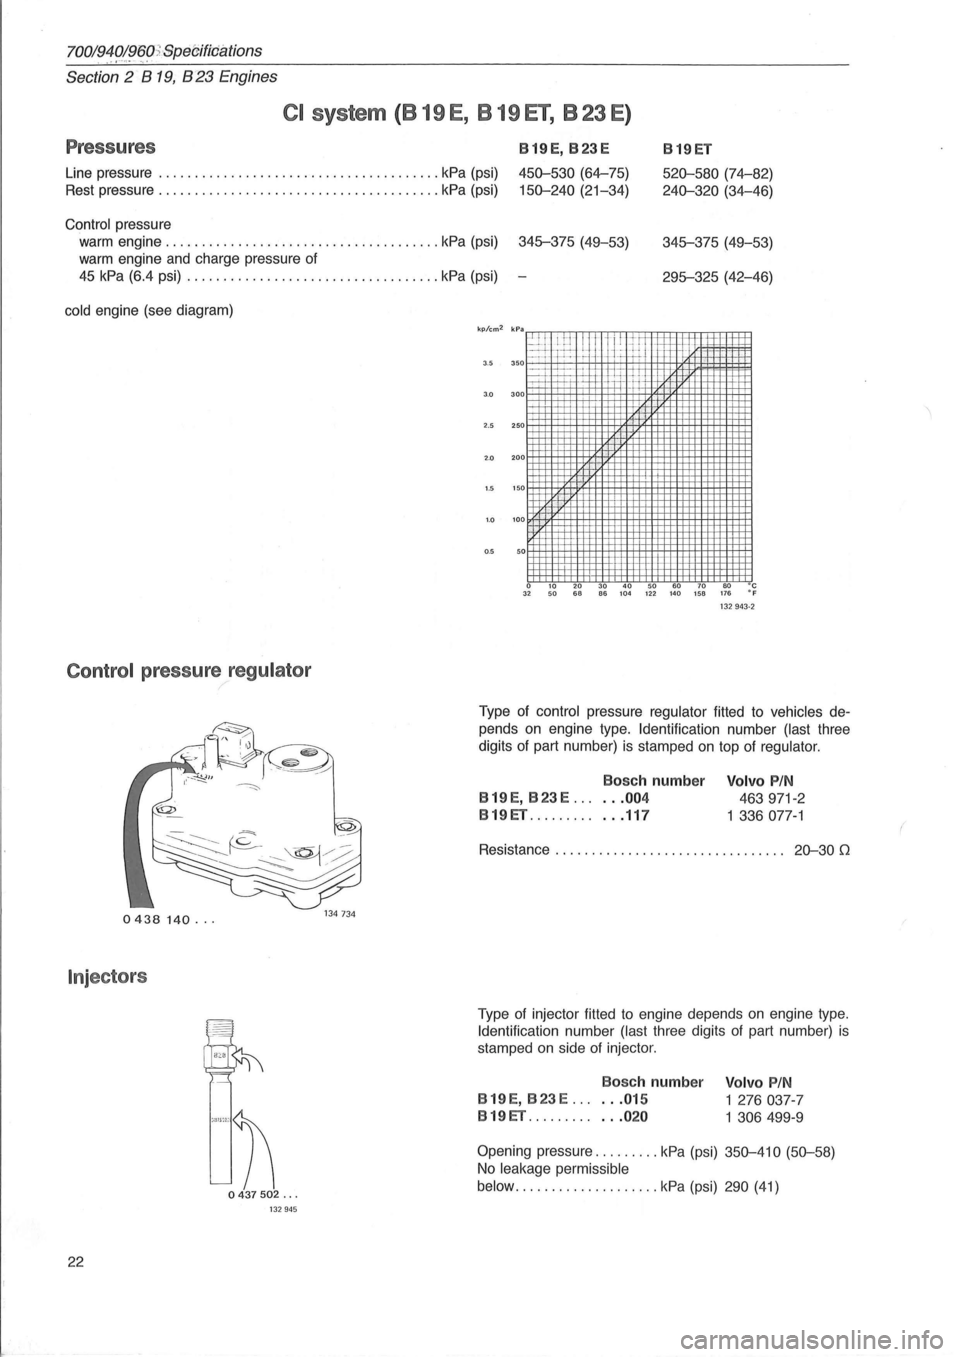 VOLVO 960 1982  Service Owners Manual 700/919!~o,(}).spe(jifiJjations 
Section 2 819, 823 Engines 
CI system (B  19  E, B  19 El, B  23  E) 
Pressures B19ET 
Line  pressure  ....................................... kPa (psi) 
B19E, B23 E 
